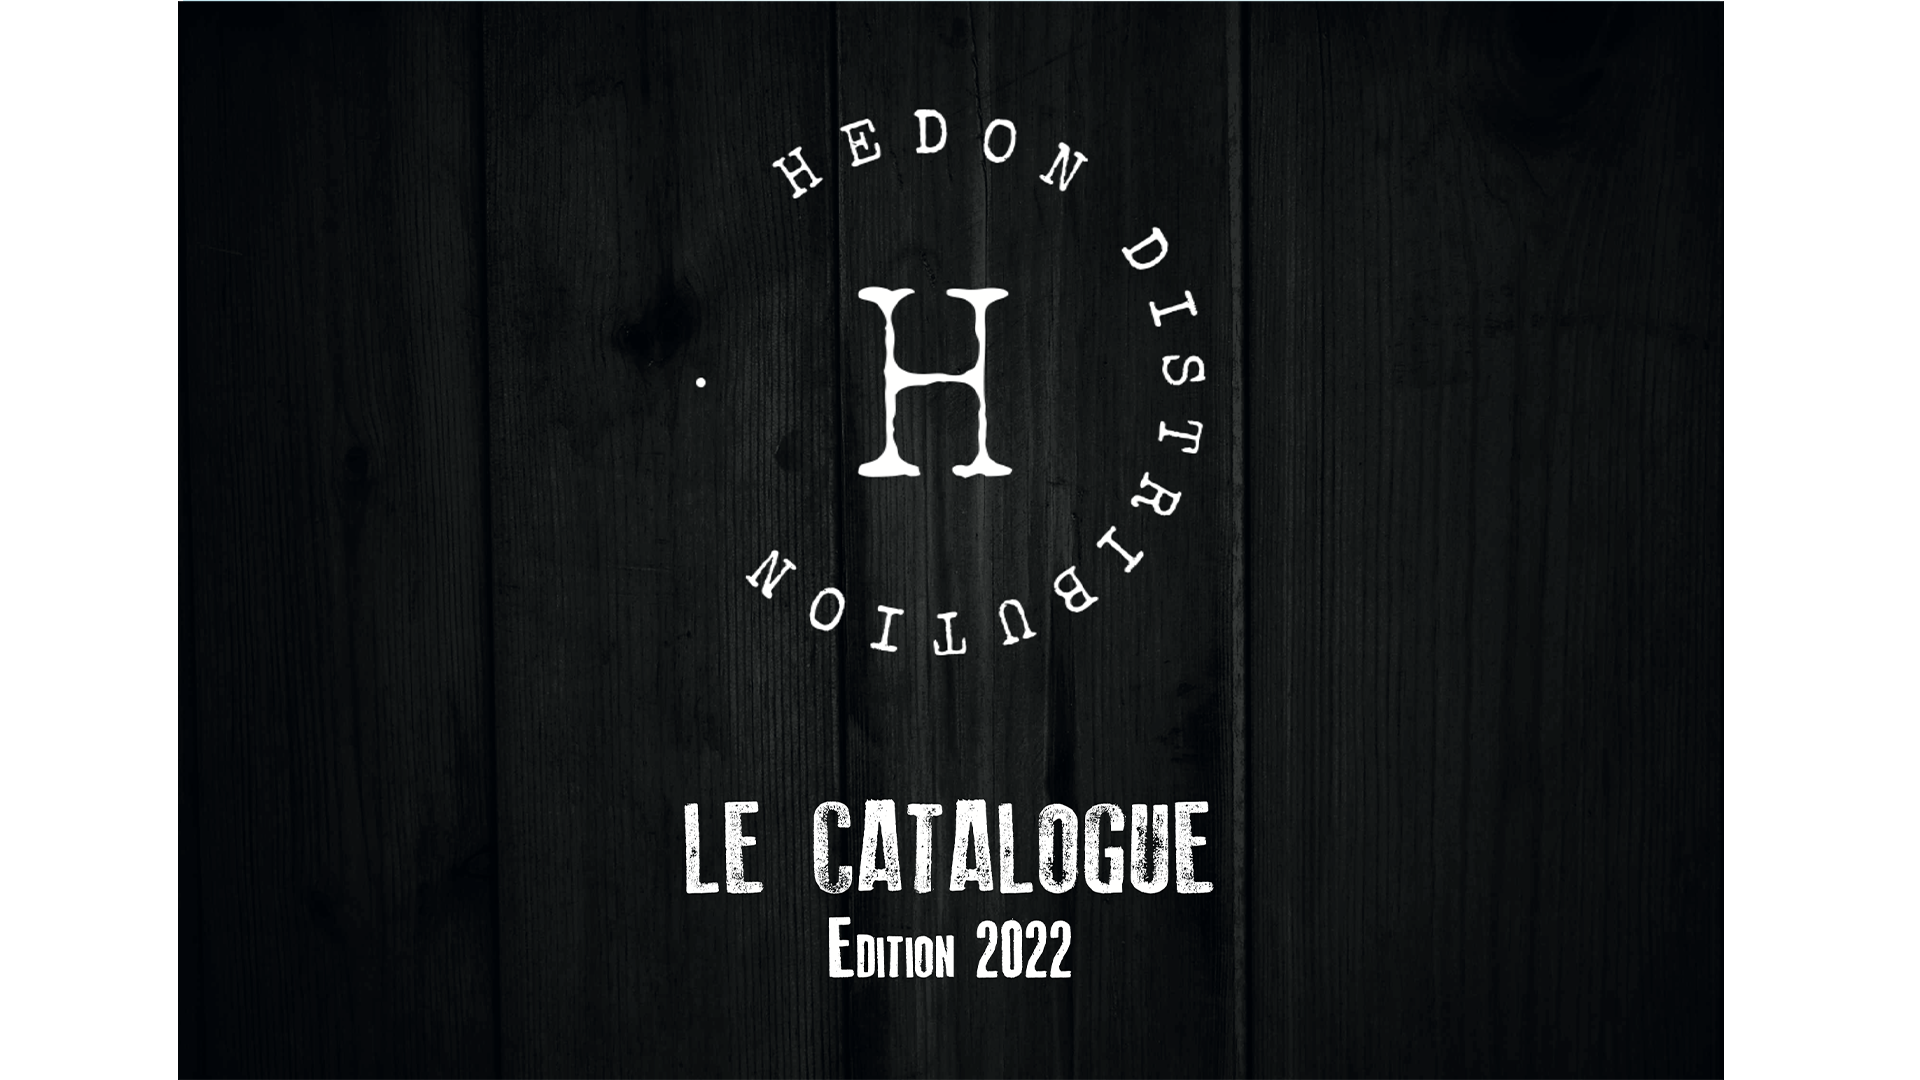 Catalogue Original - Hedon distribution 2022